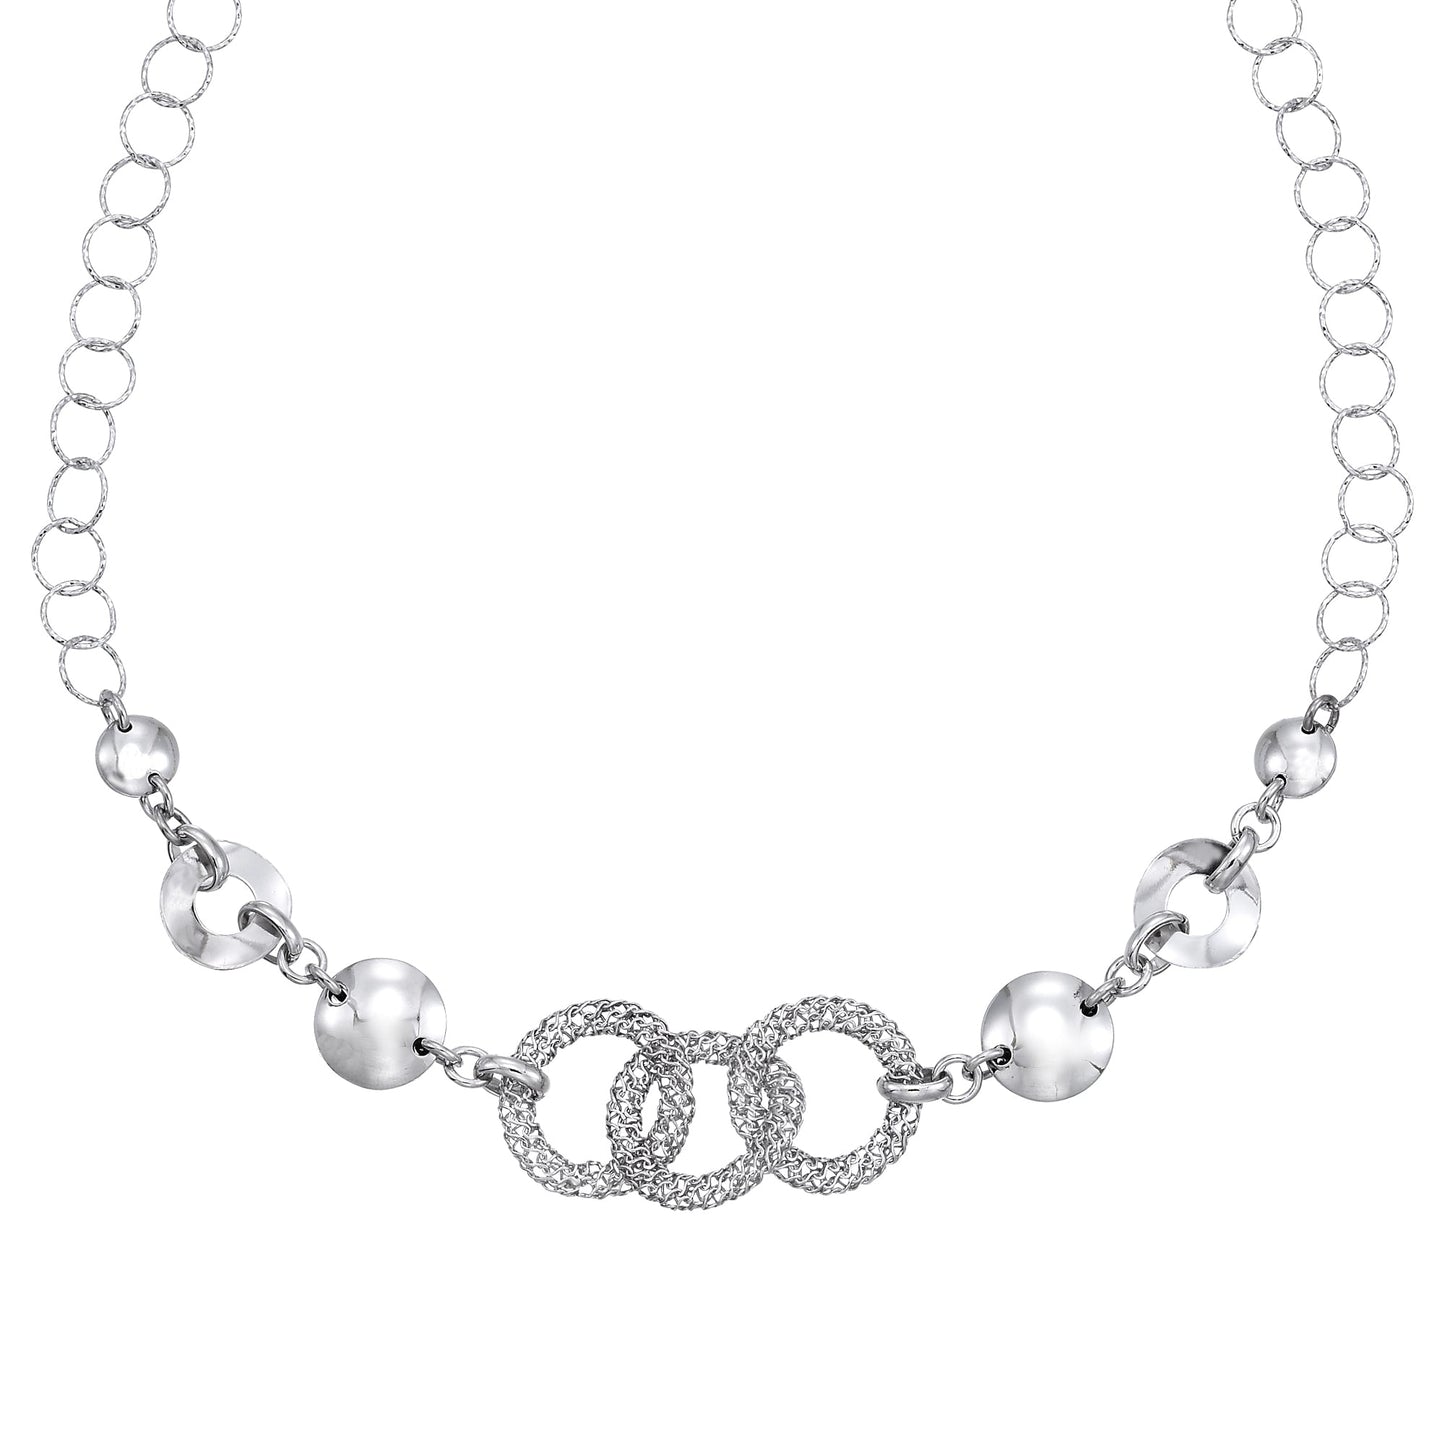 Franco Stellari Italian Sterling Silver Fancy Circle & Mesh Link Necklace, 18"